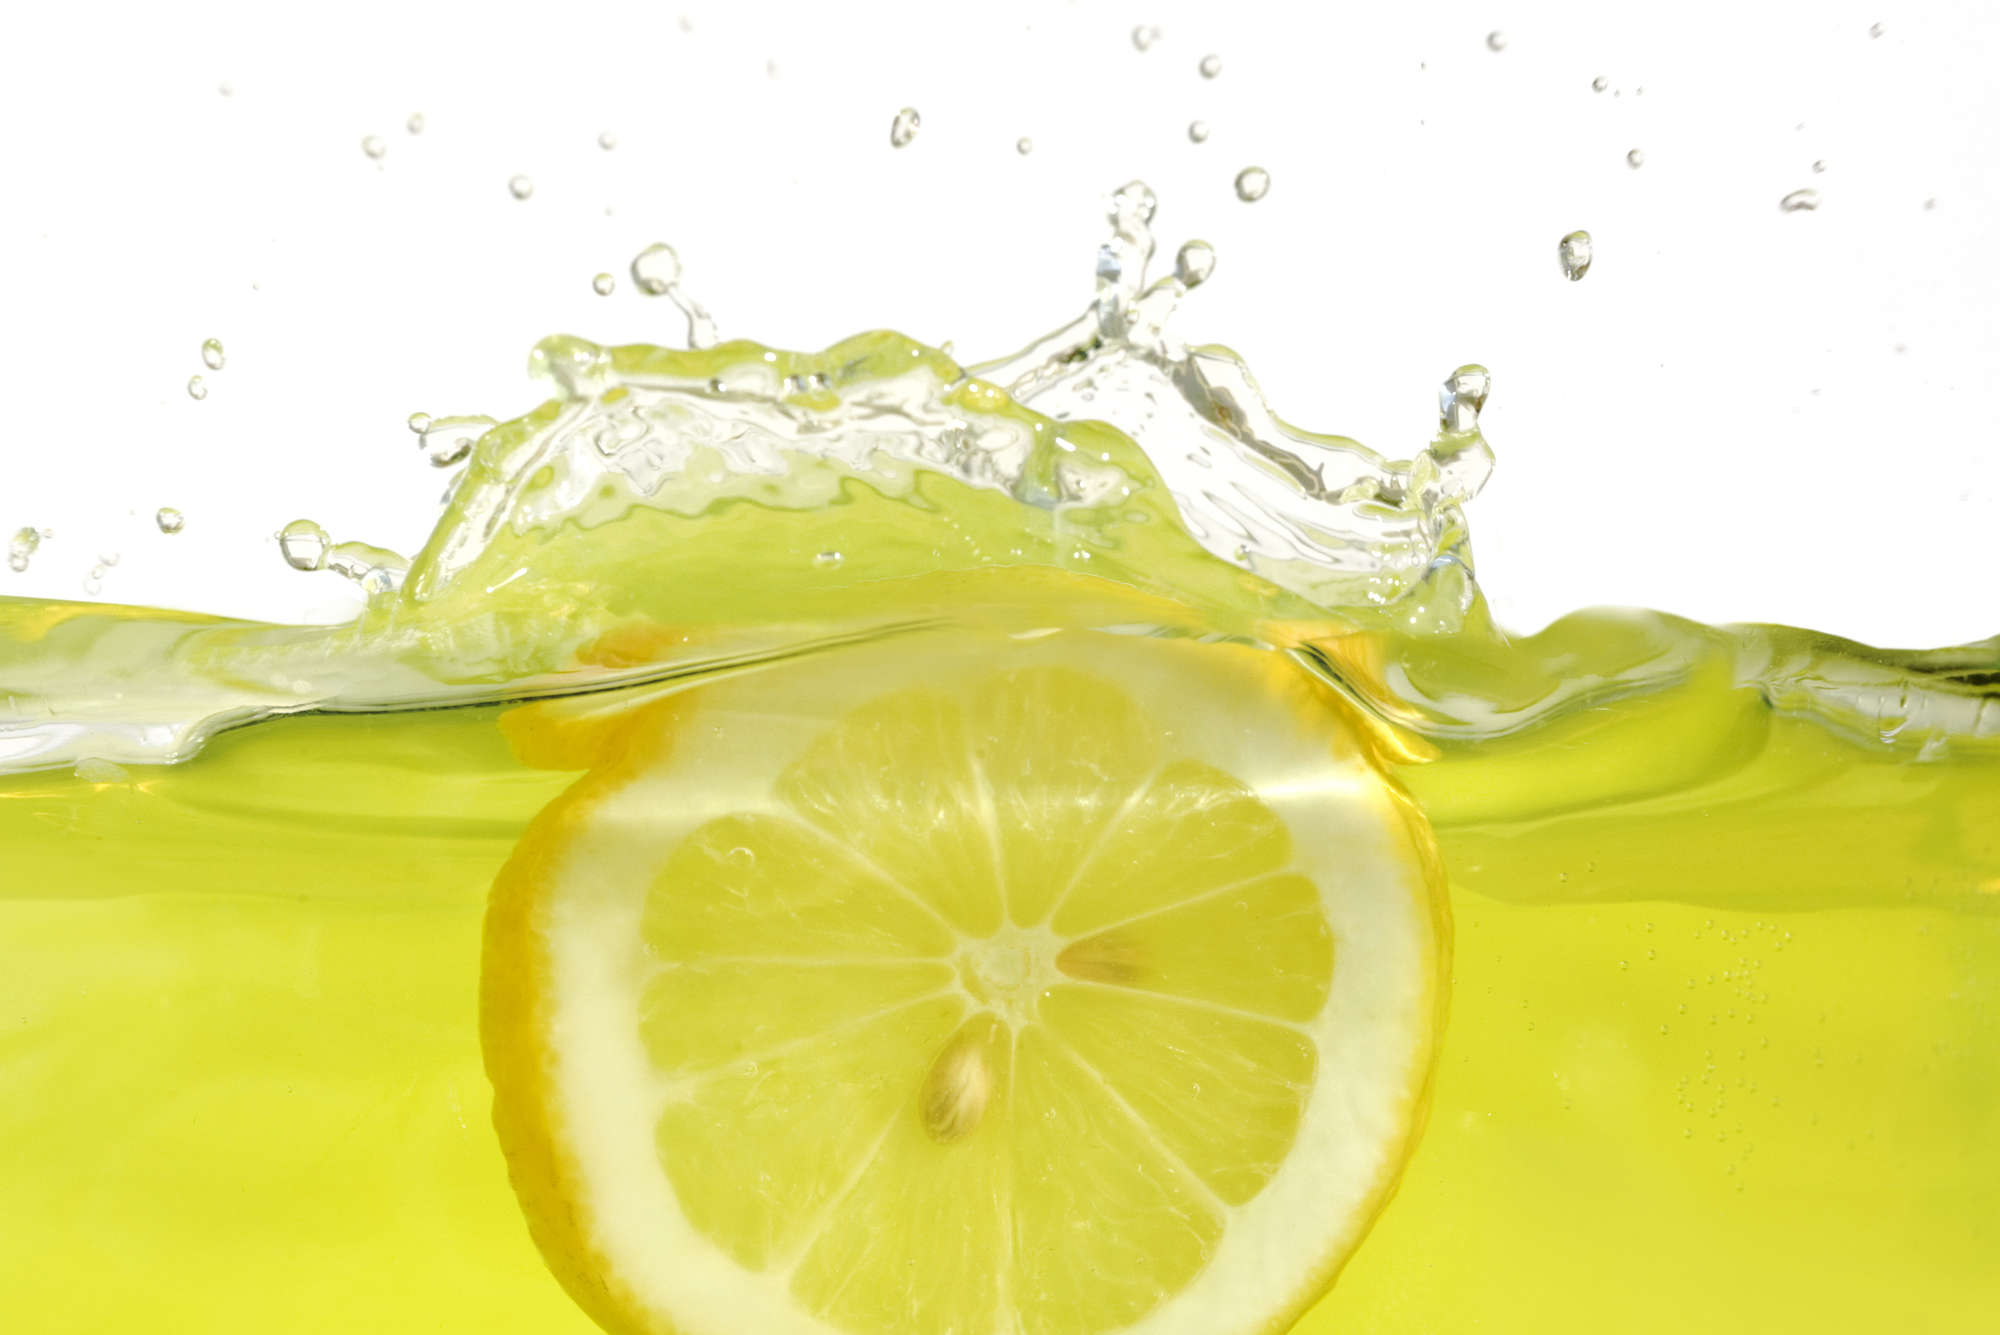             Fototapete Zitrone im Wasser – Premium Glattvlies
        